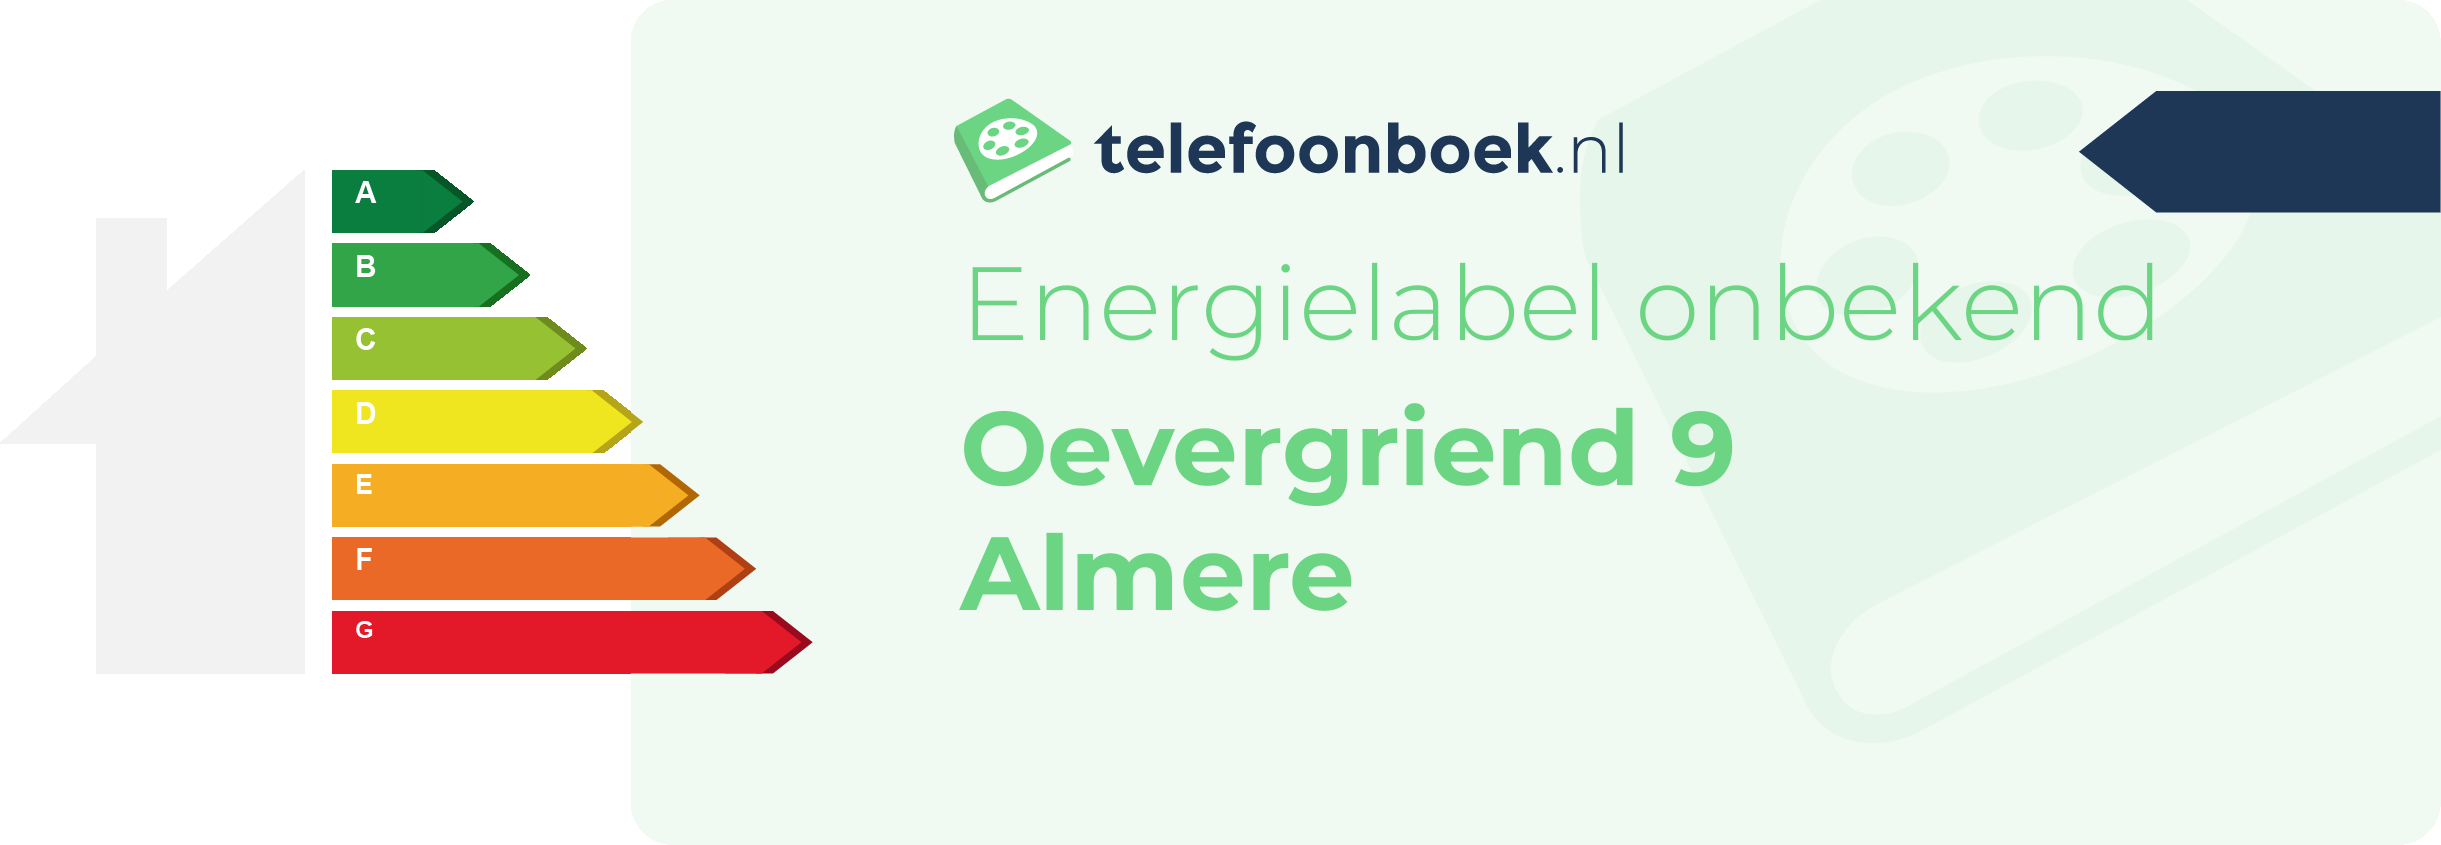 Energielabel Oevergriend 9 Almere